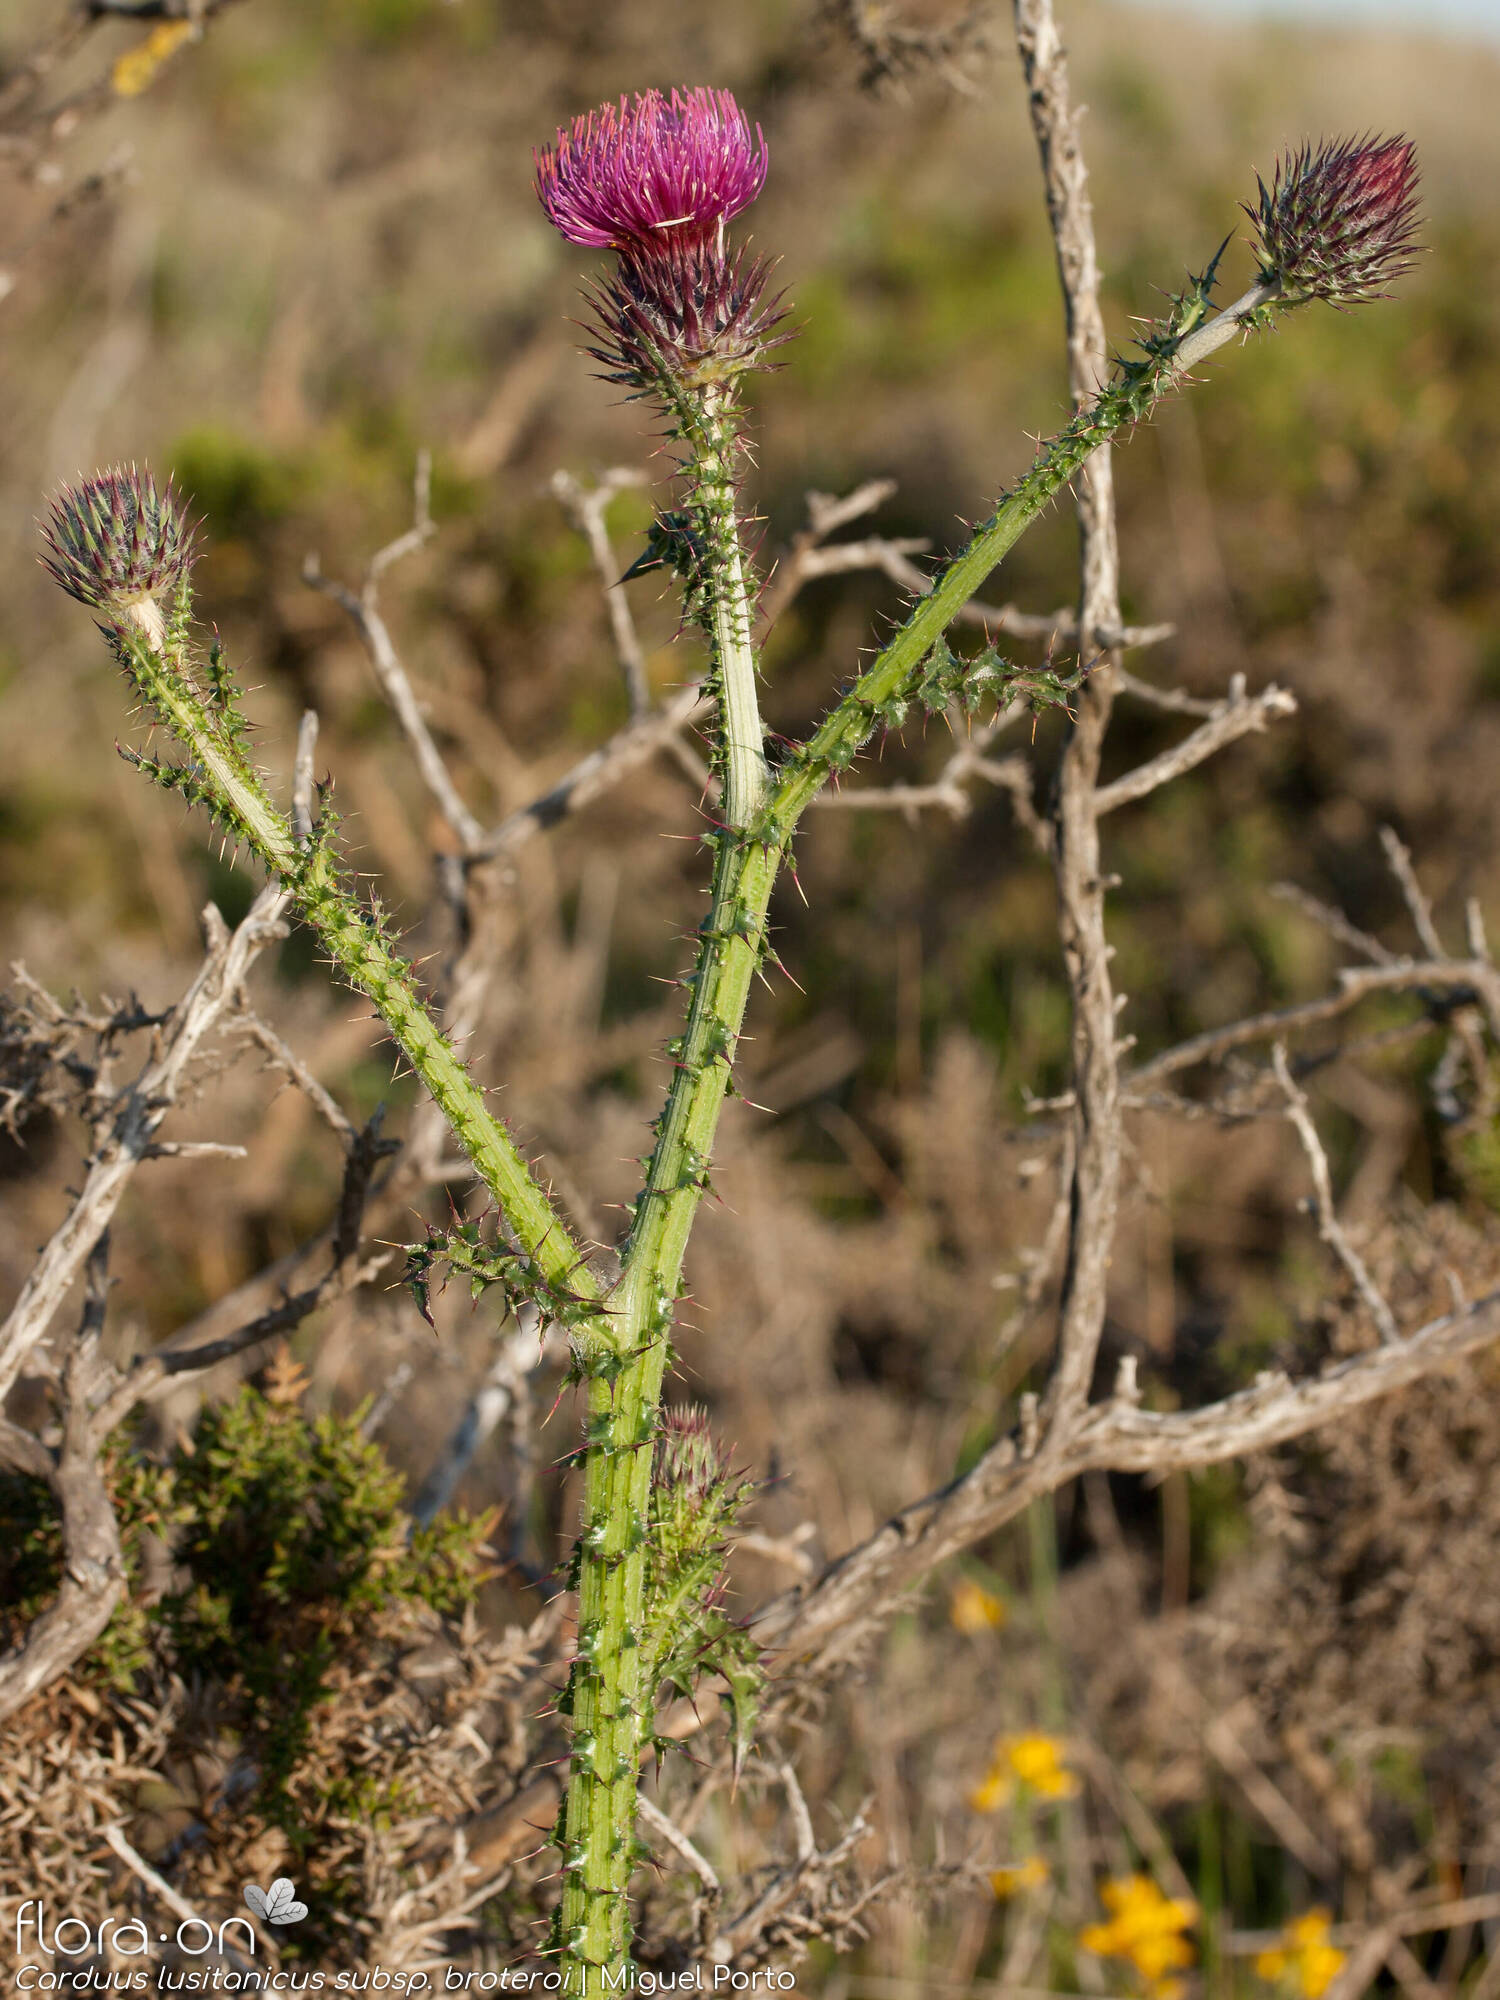 Carduus lusitanicus - Flor (geral) | Miguel Porto; CC BY-NC 4.0